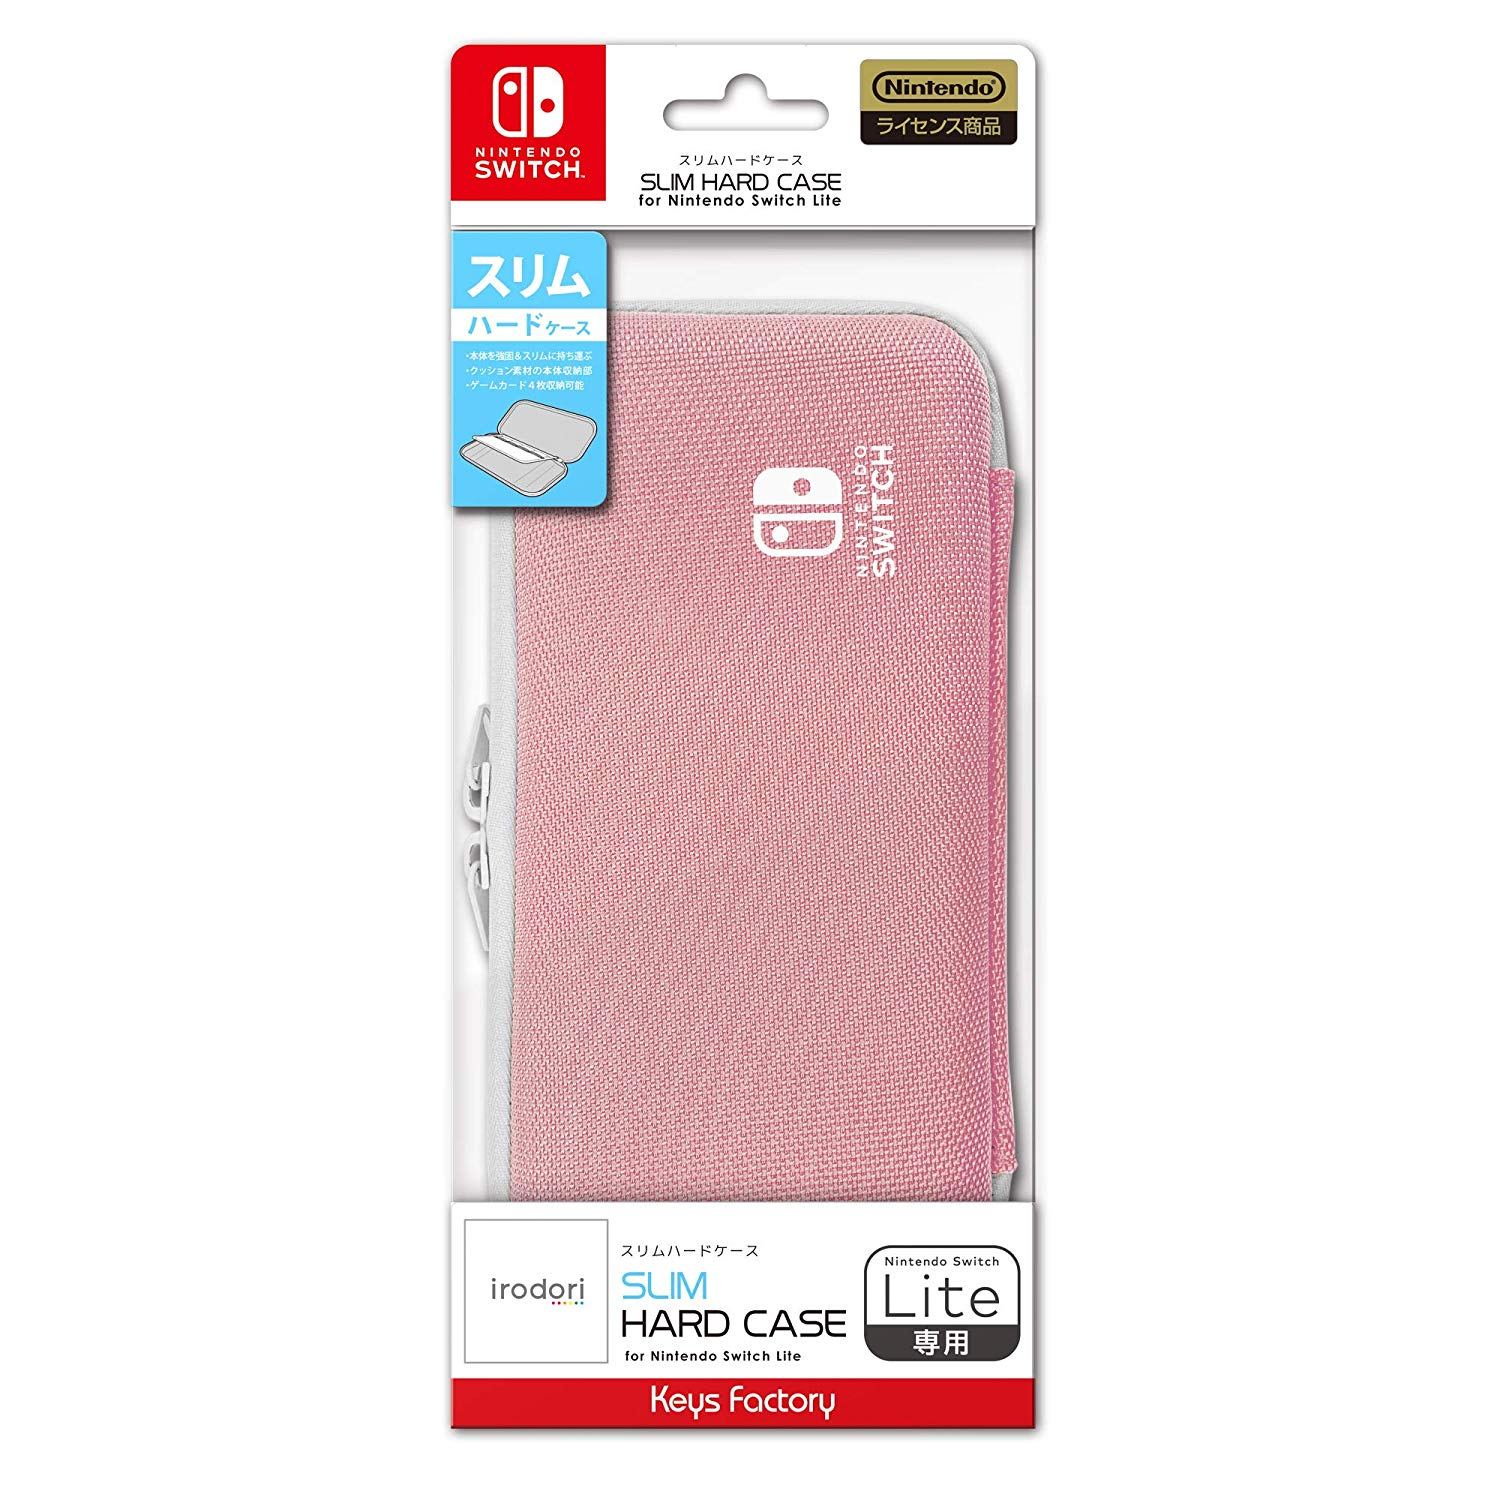 Nintendo Switch Lite Pink Price